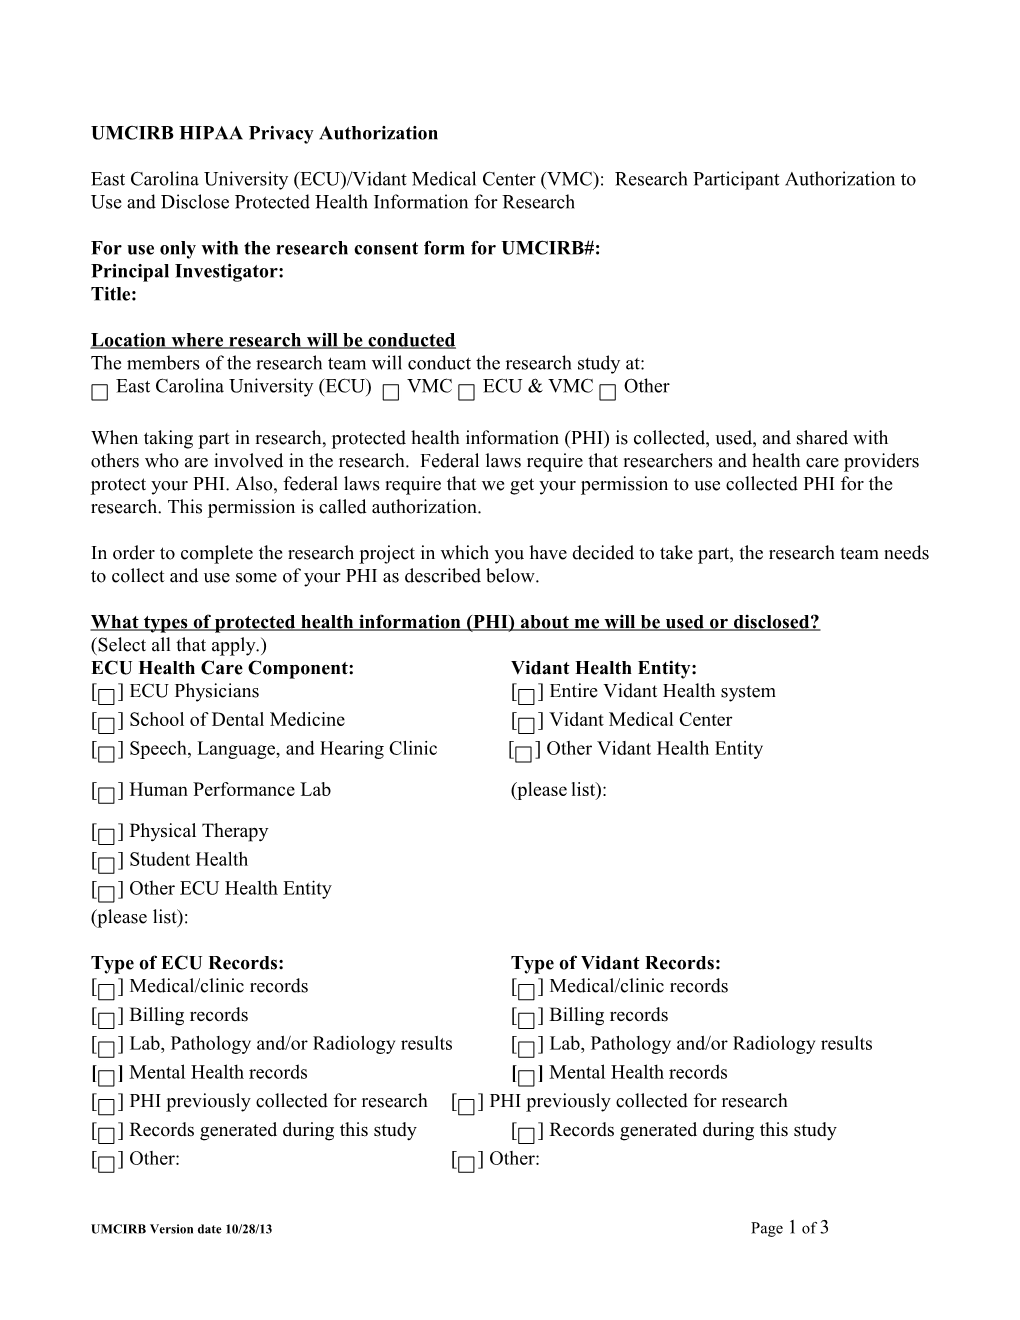 UMCIRB HIPAA Authorization 8/03 Version